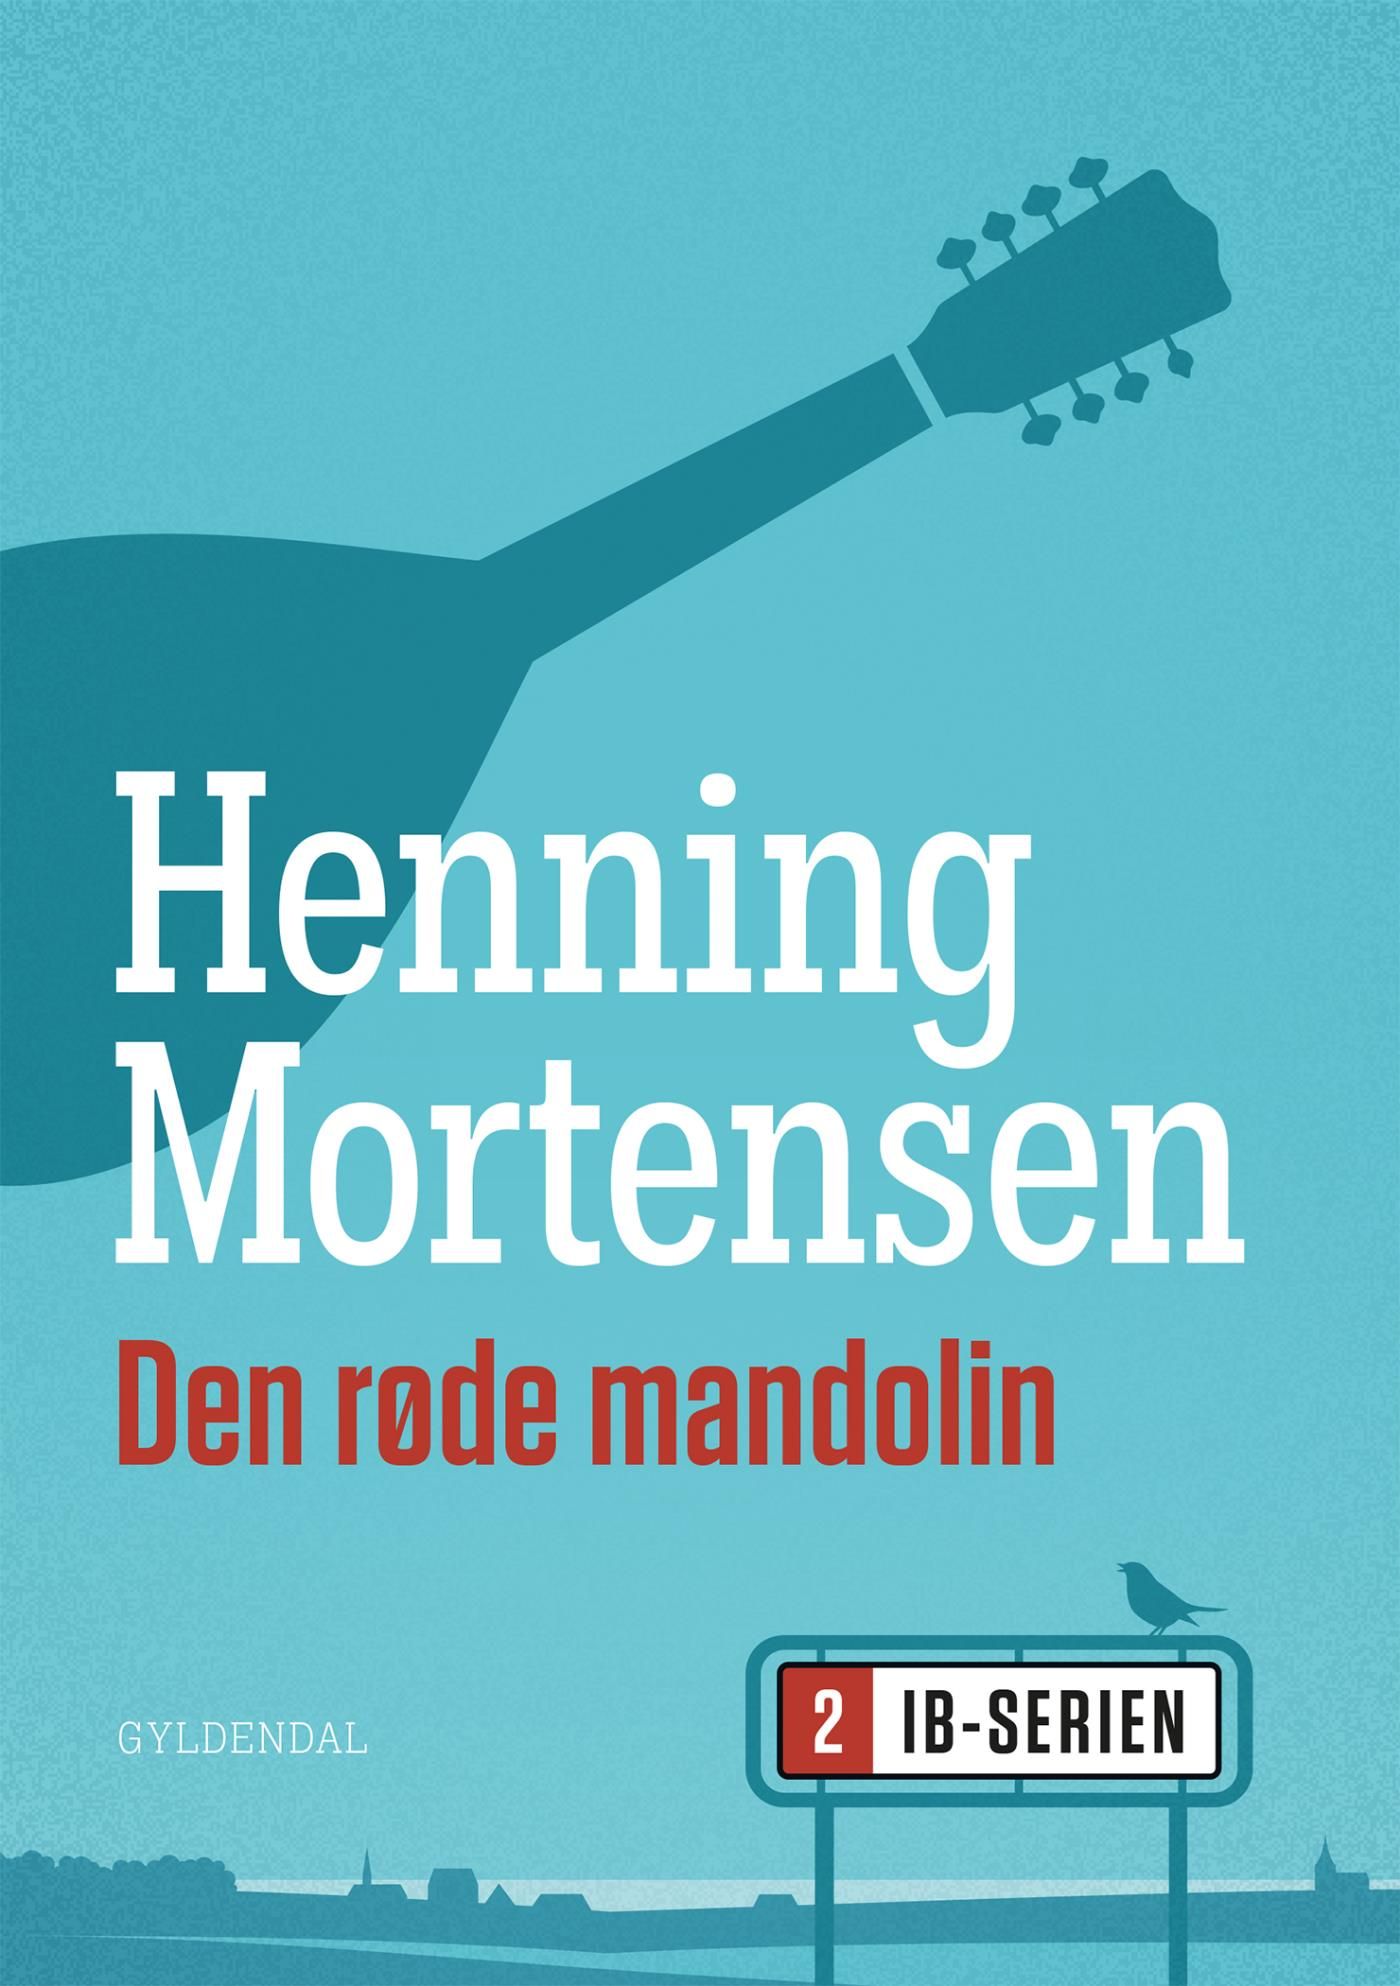 Den røde mandolin, eBook by Henning Mortensen